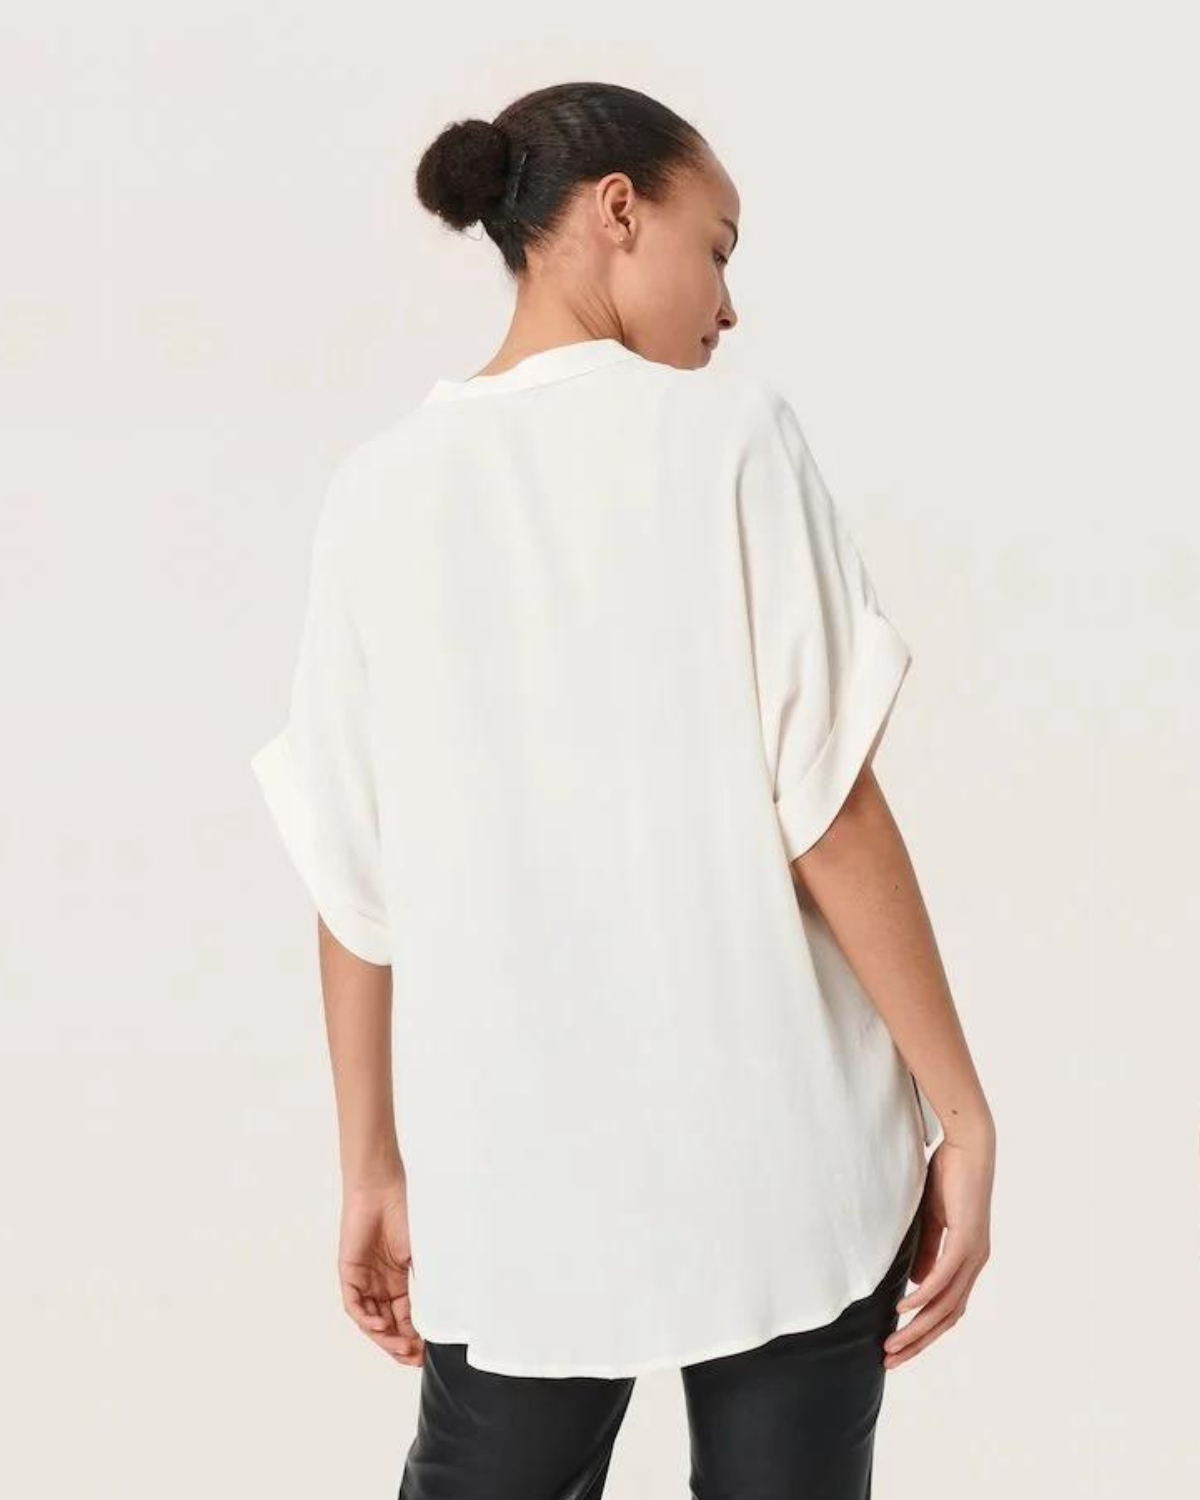 Helia Shirt - Broken White | Soaked